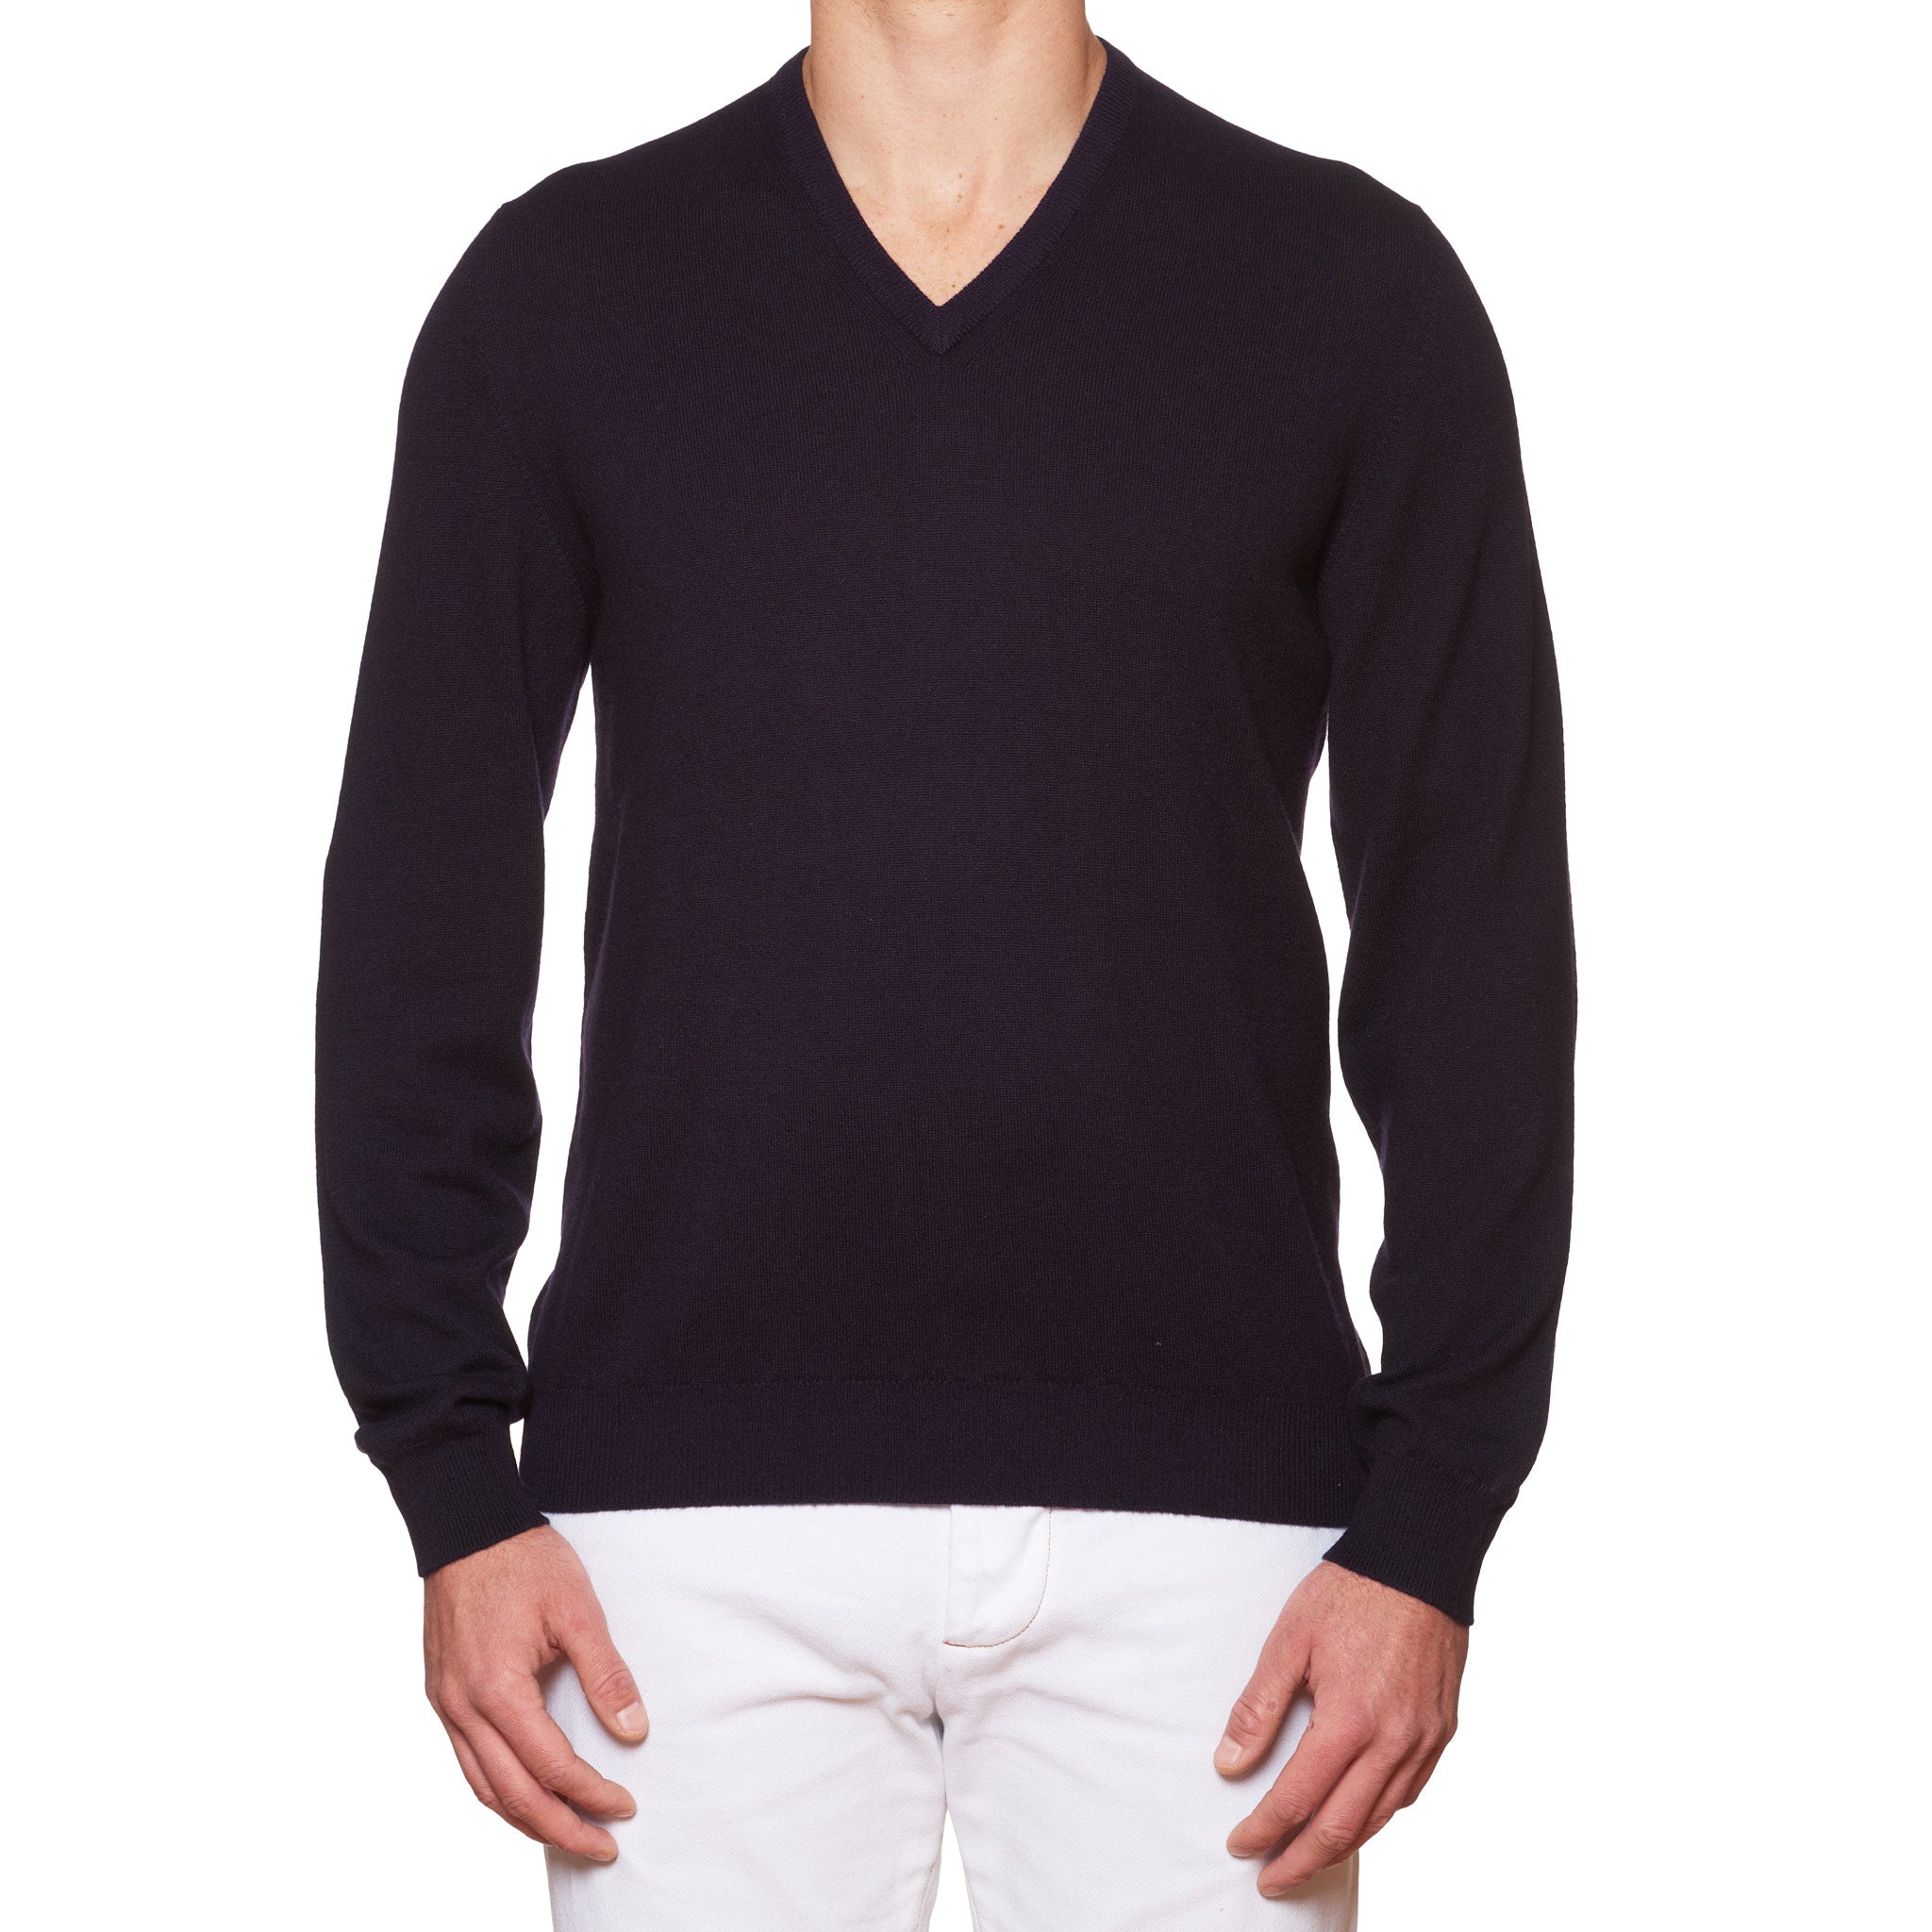 Wool and cashmere crewneck sweater in Dark blue: Luxury Italian Knitwear